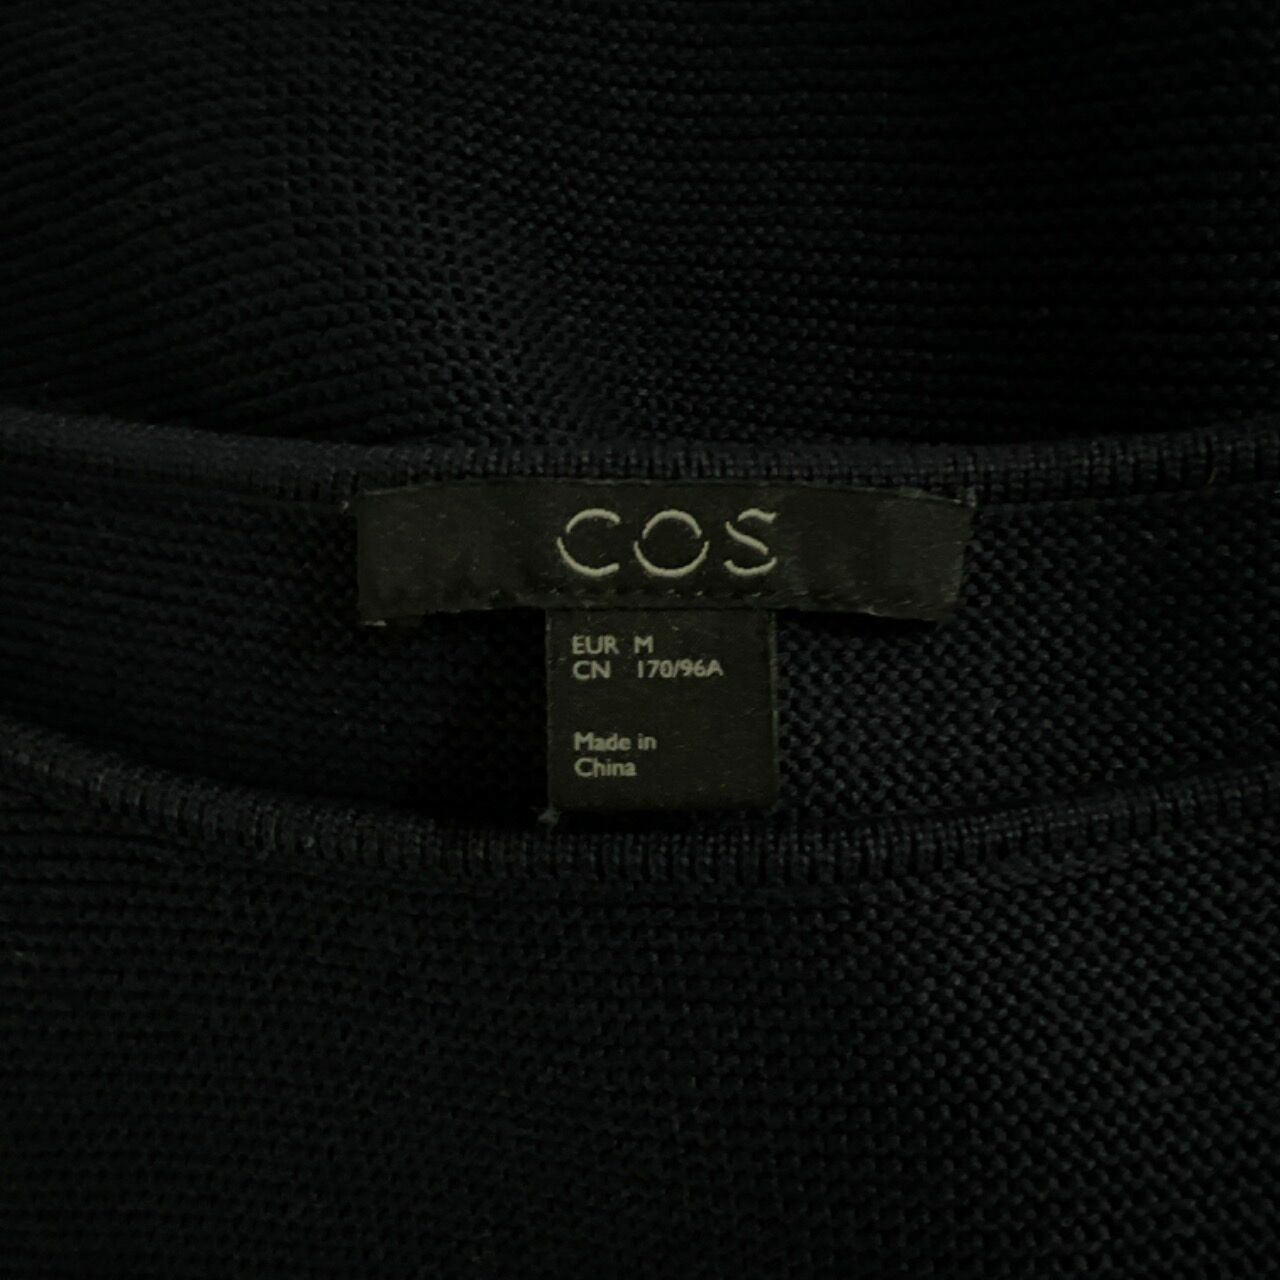 Cos Dark Blue Knit Blouse